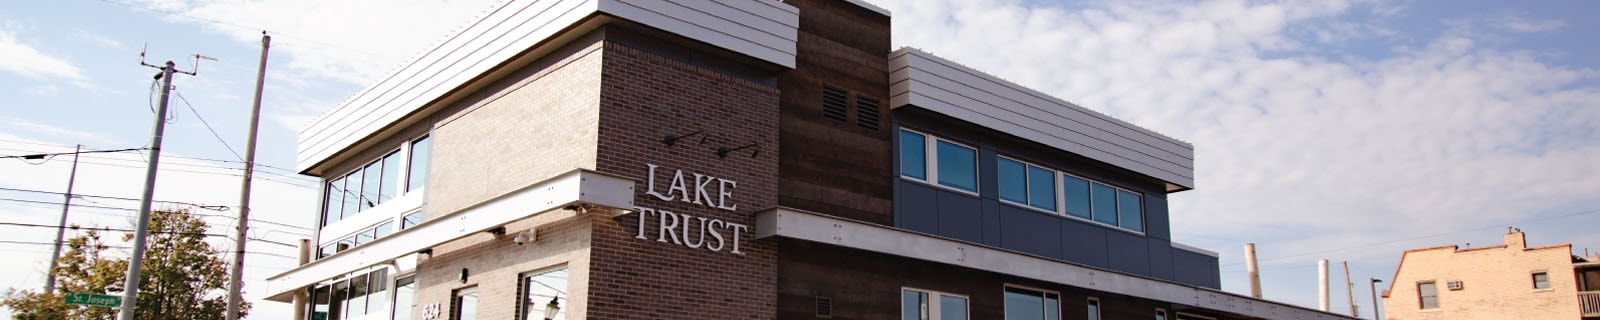 Exterior of Lake Trust Credit Union building